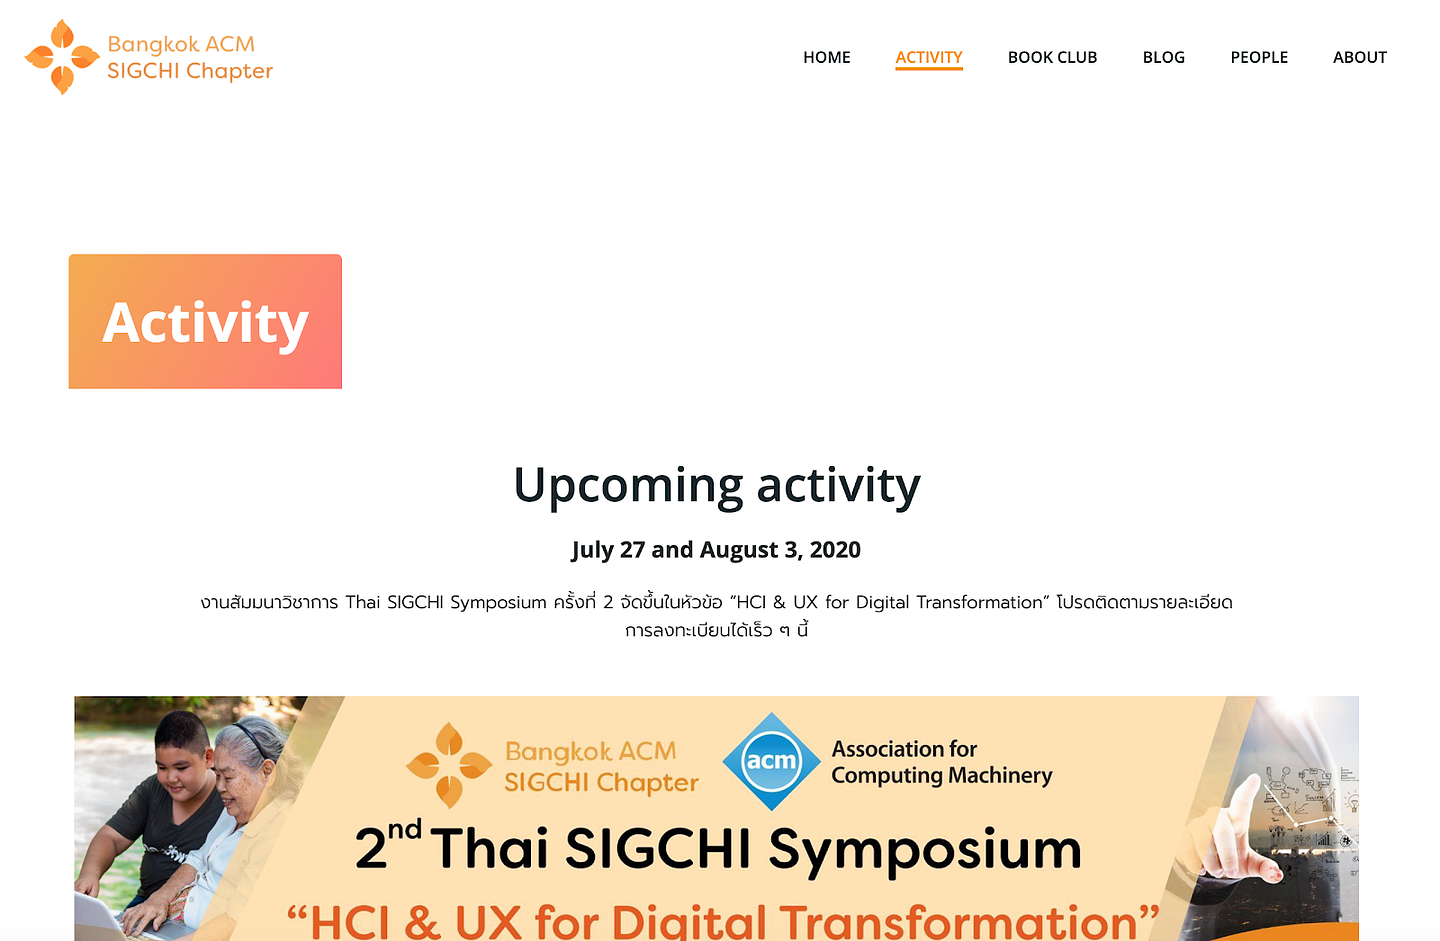 Bangkok ACM SIGCHI Chapter Website